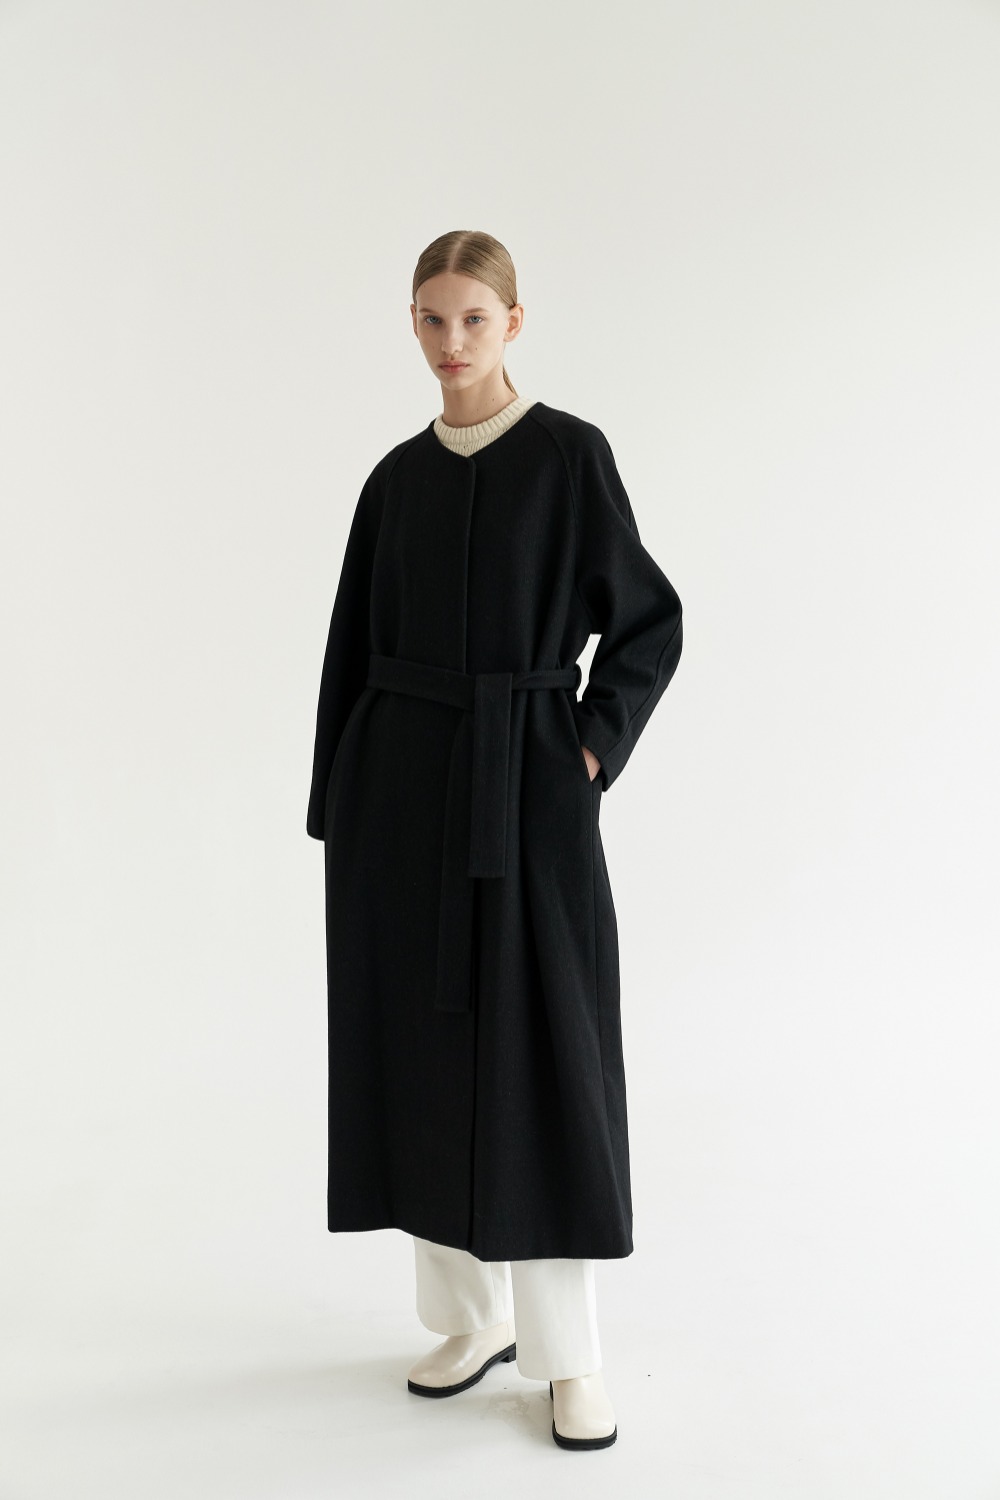 Round long coat in black